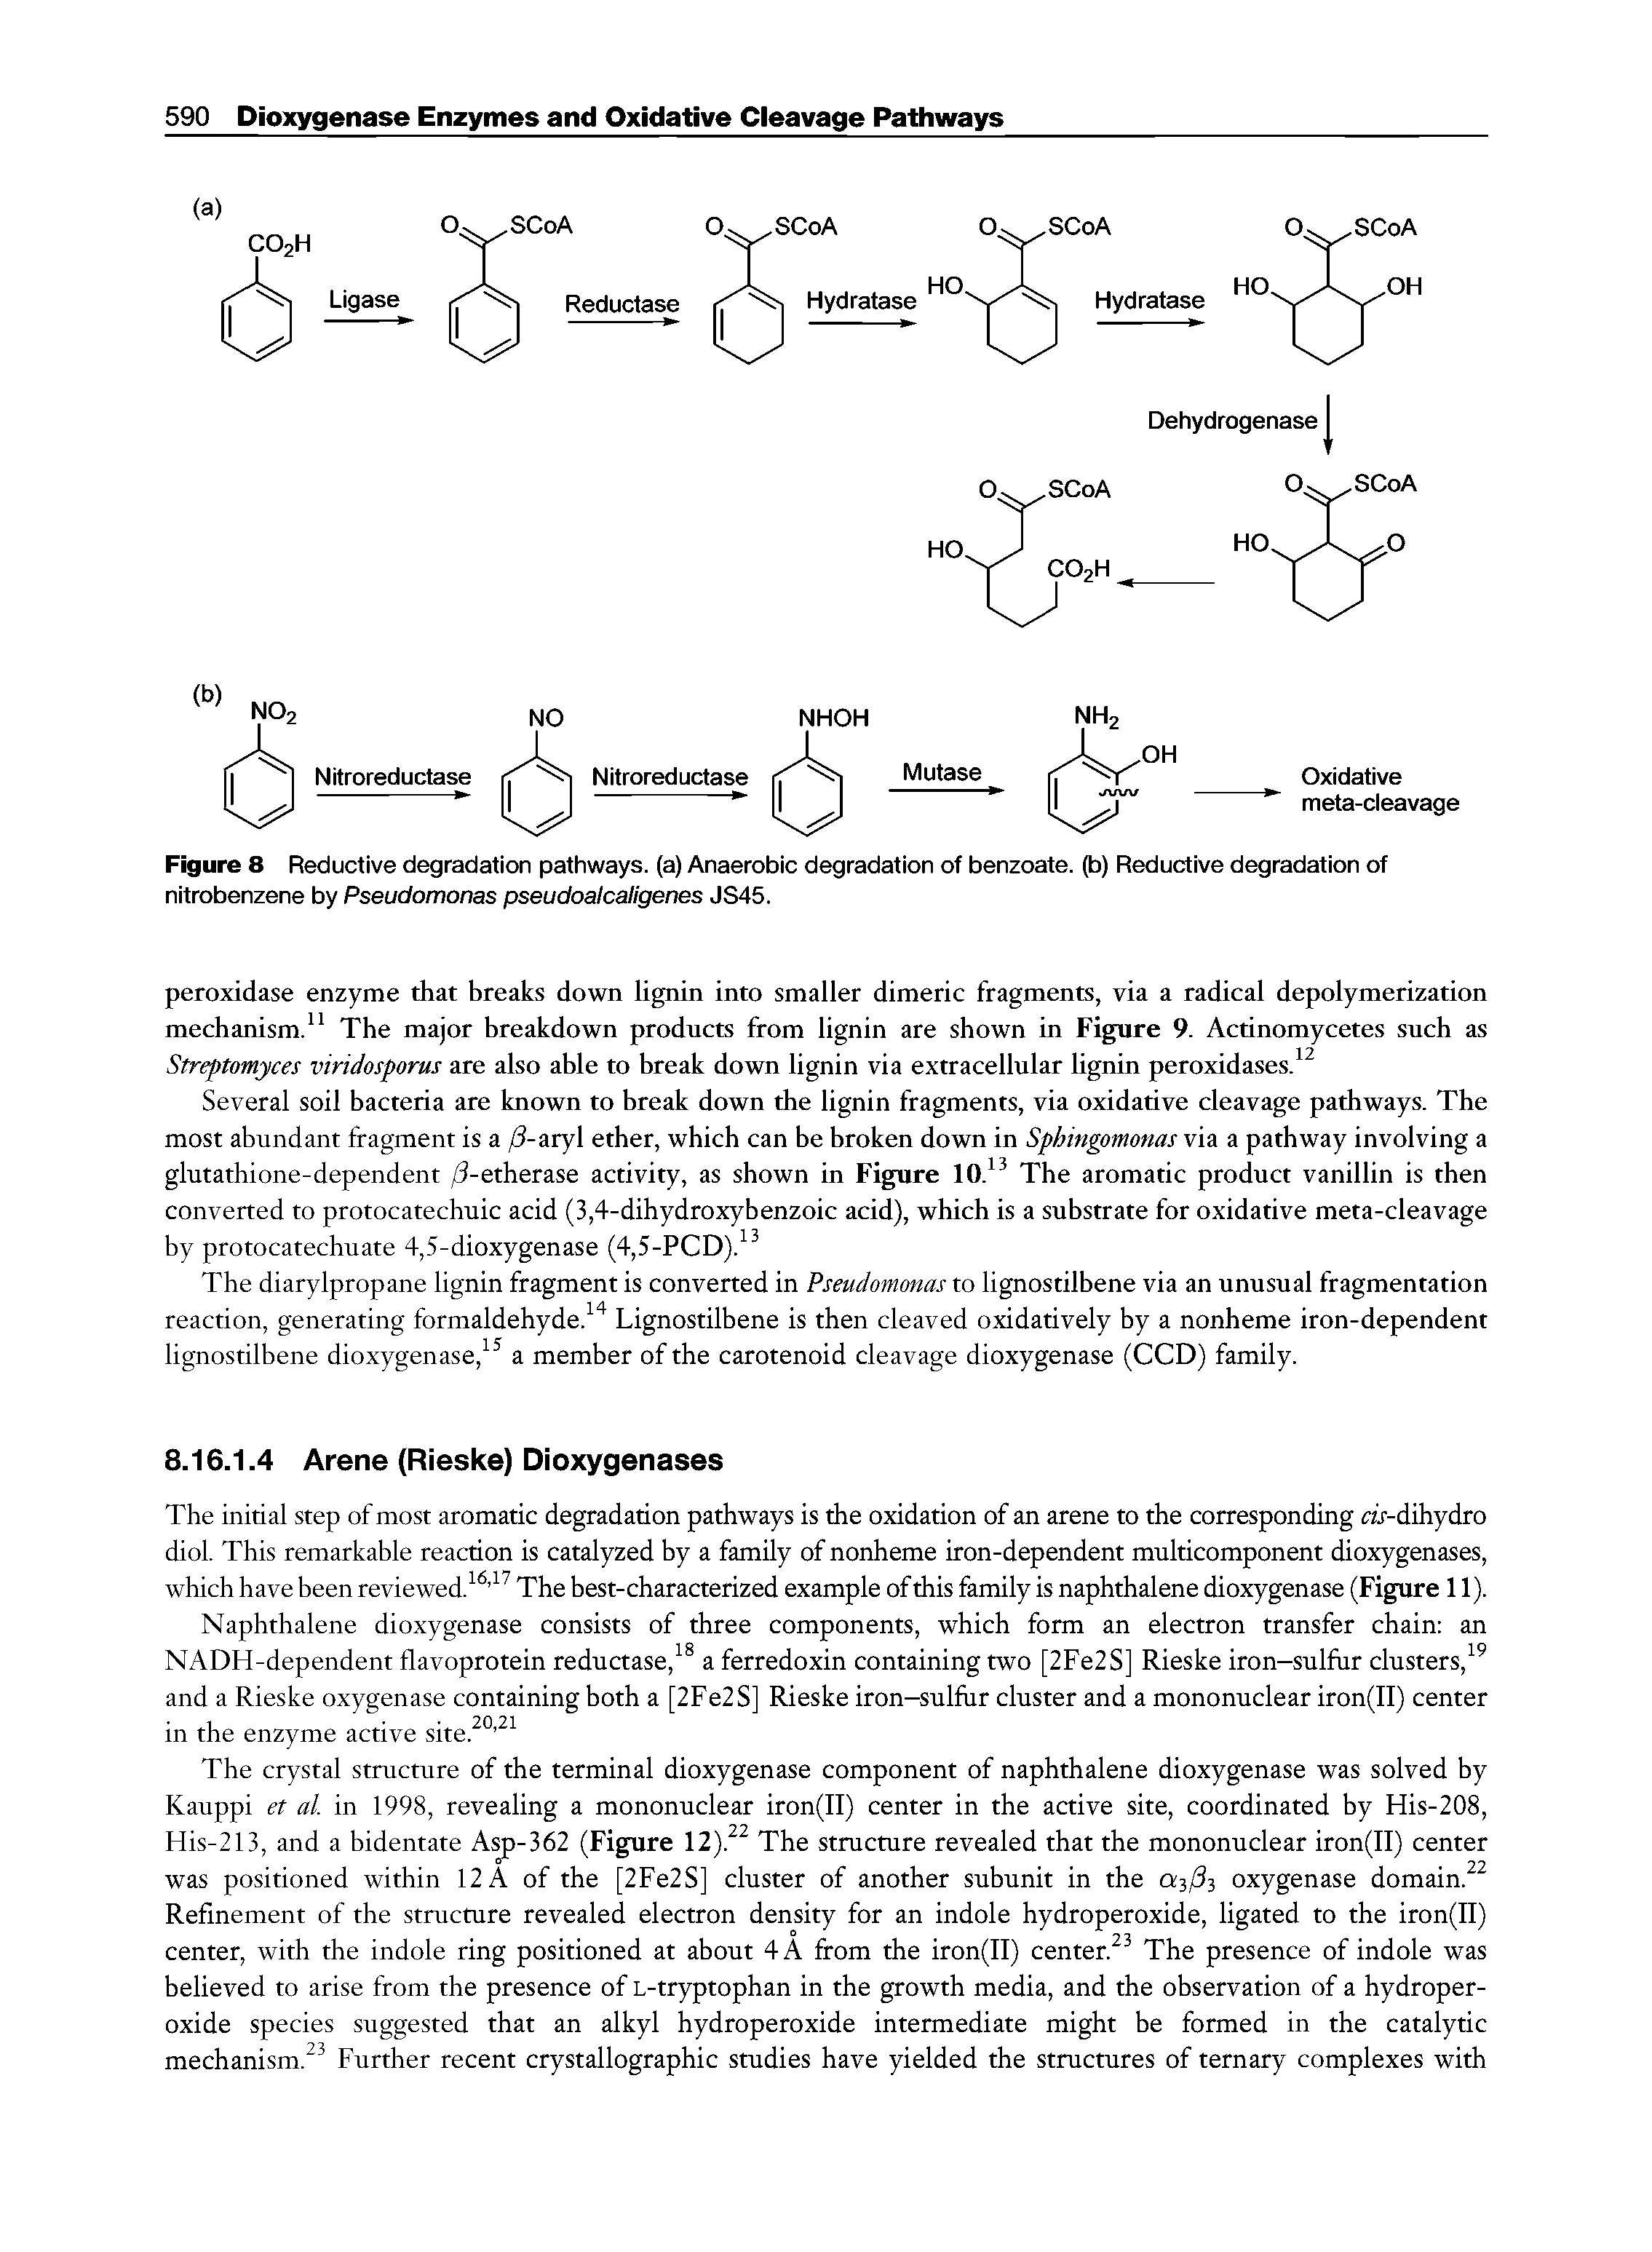 Figure 8 Reductive degradation pathways, (a) Anaerobic degradation of benzoate, (b) Reductive degradation of nitrobenzene by Pseudomonas pseudoalcaligenes JS45.